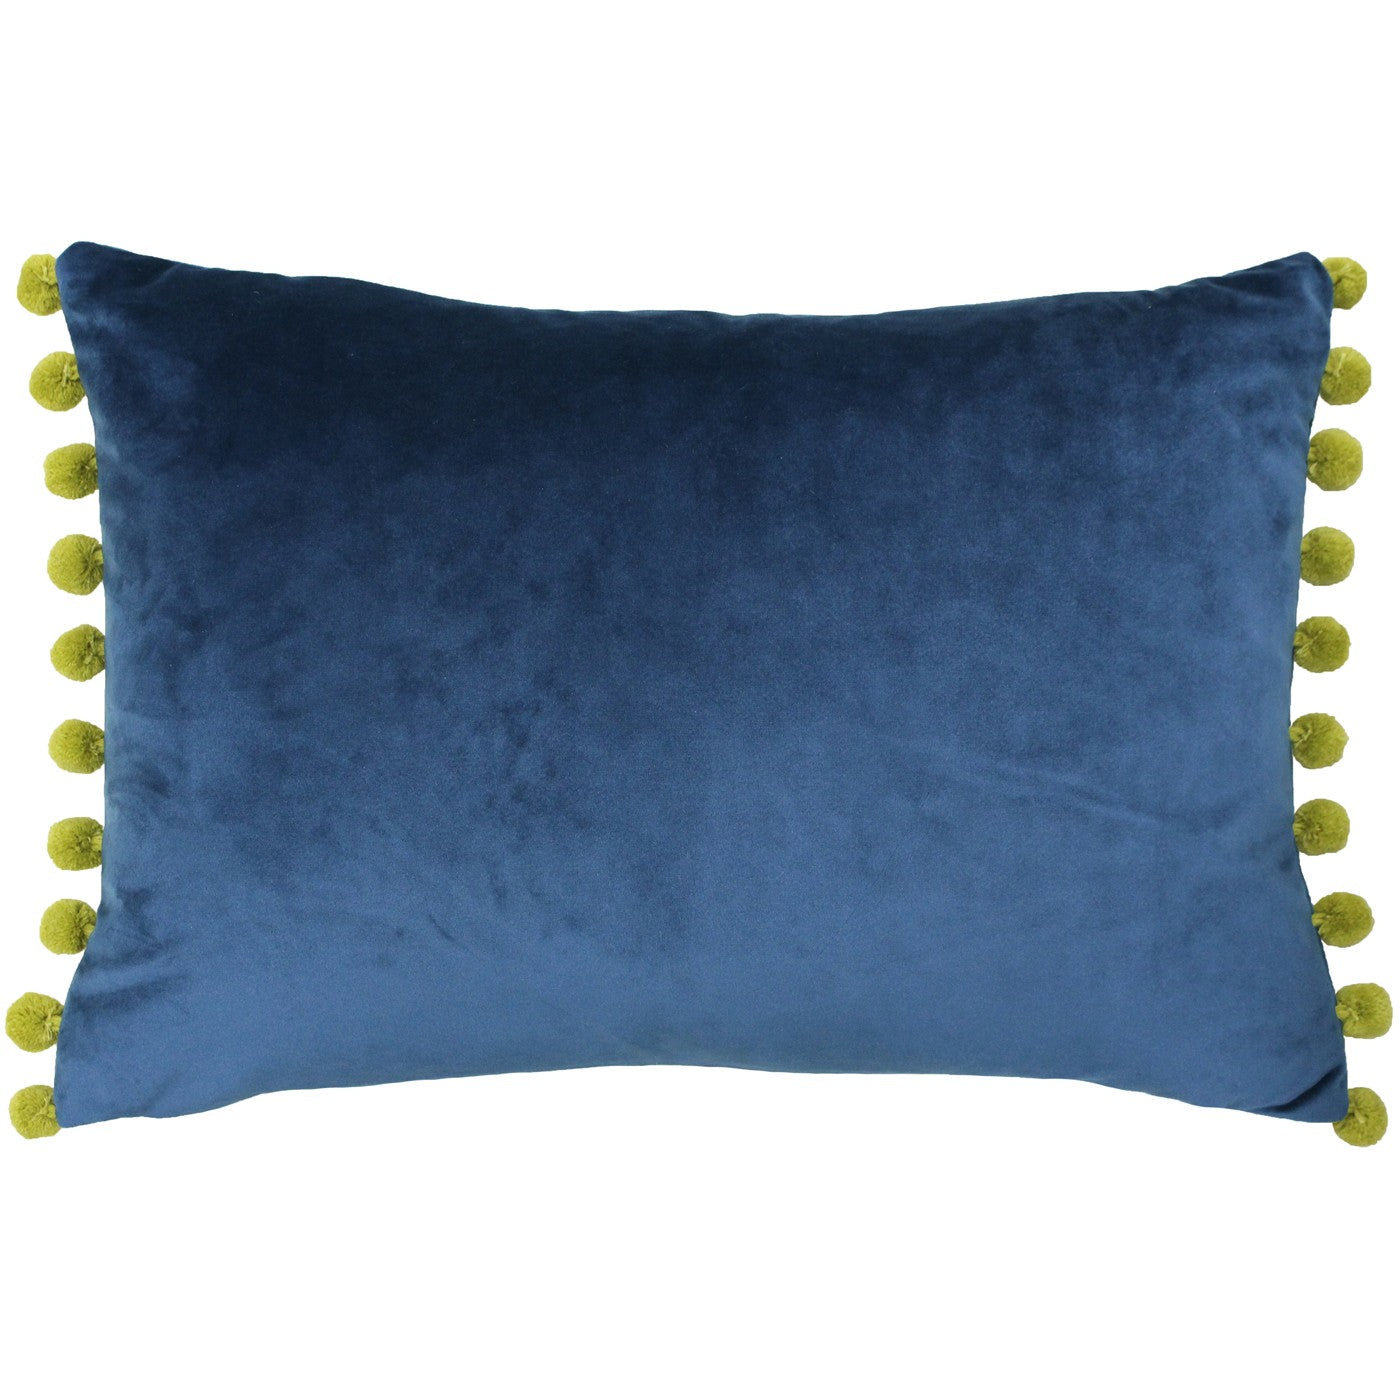 Indigo Blue Rectangle Cushion with Bamboo coloured Pom Poms